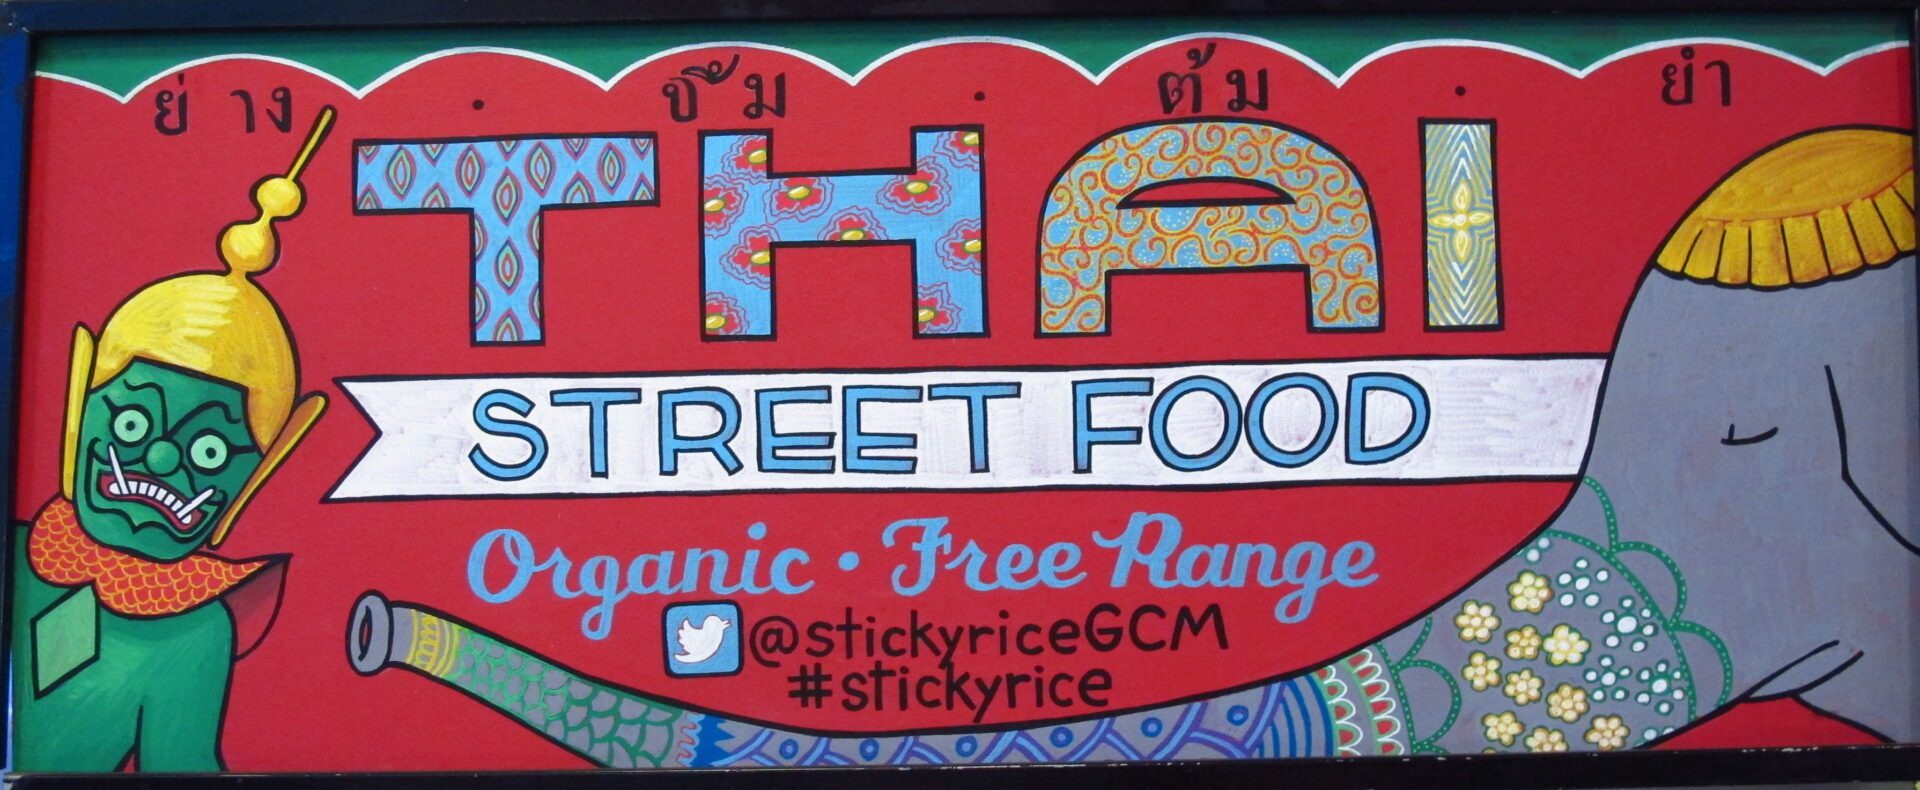 Thai Street Food, Organic-Free Range, Grand Central Market, LA